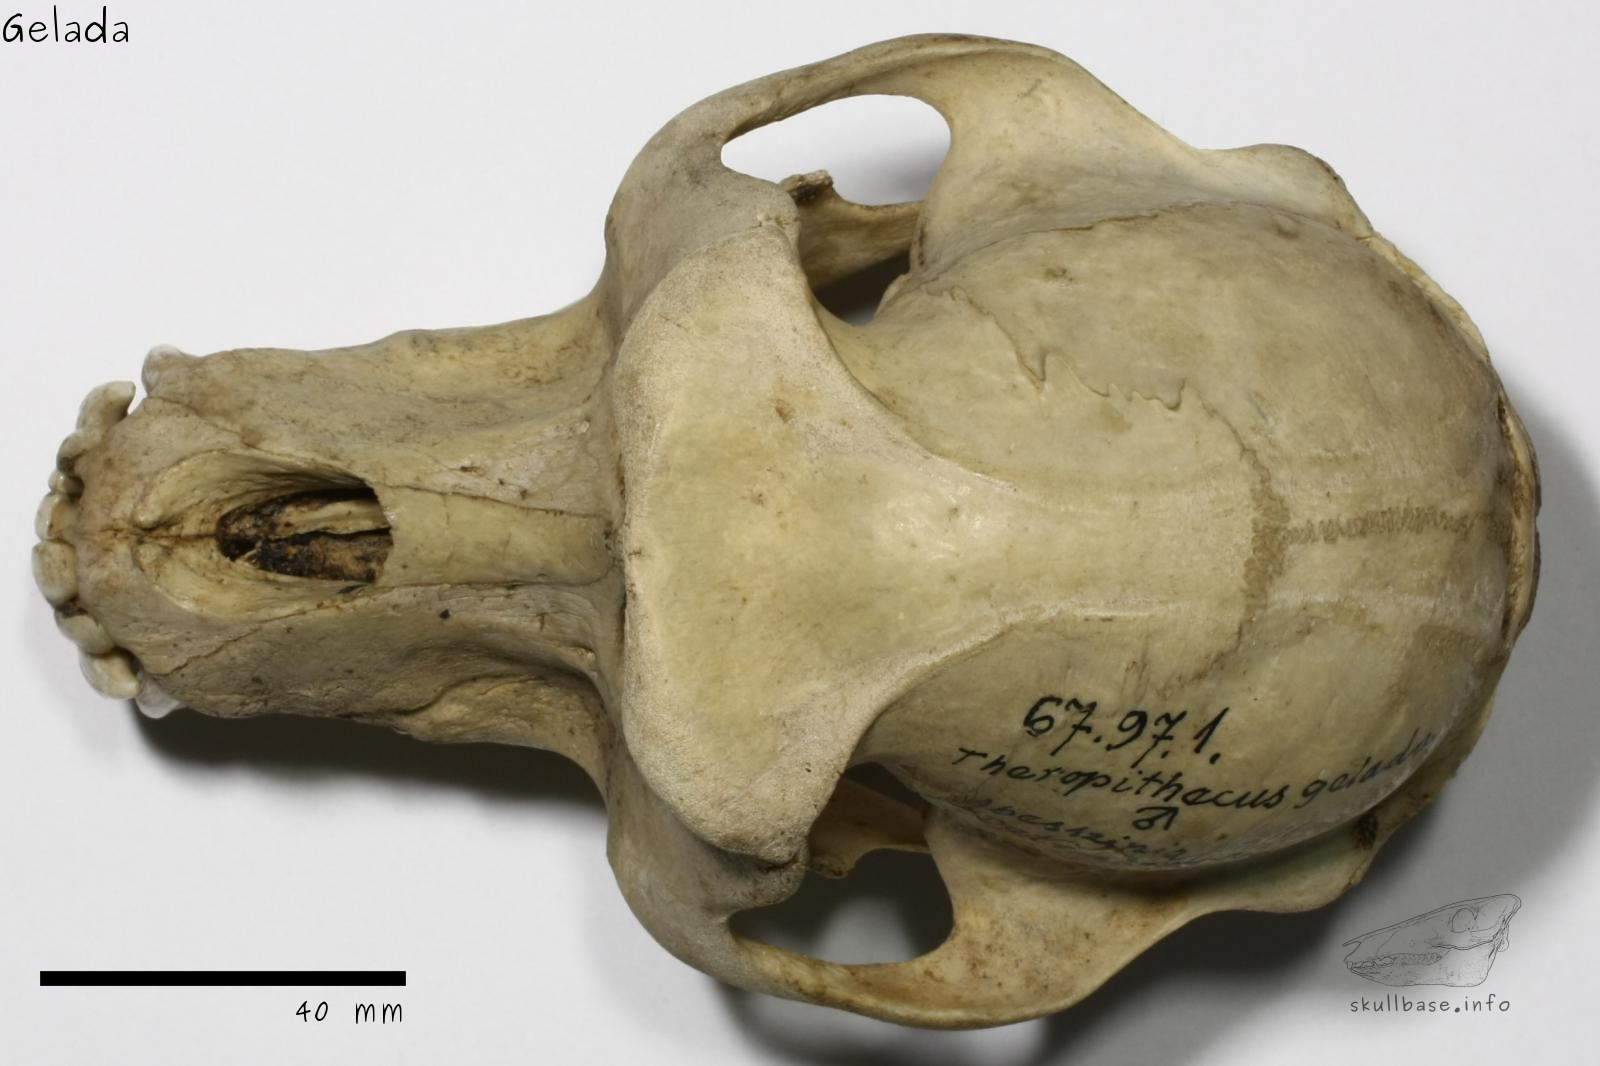 Gelada (Theropithecus gelada) skull dorsal view